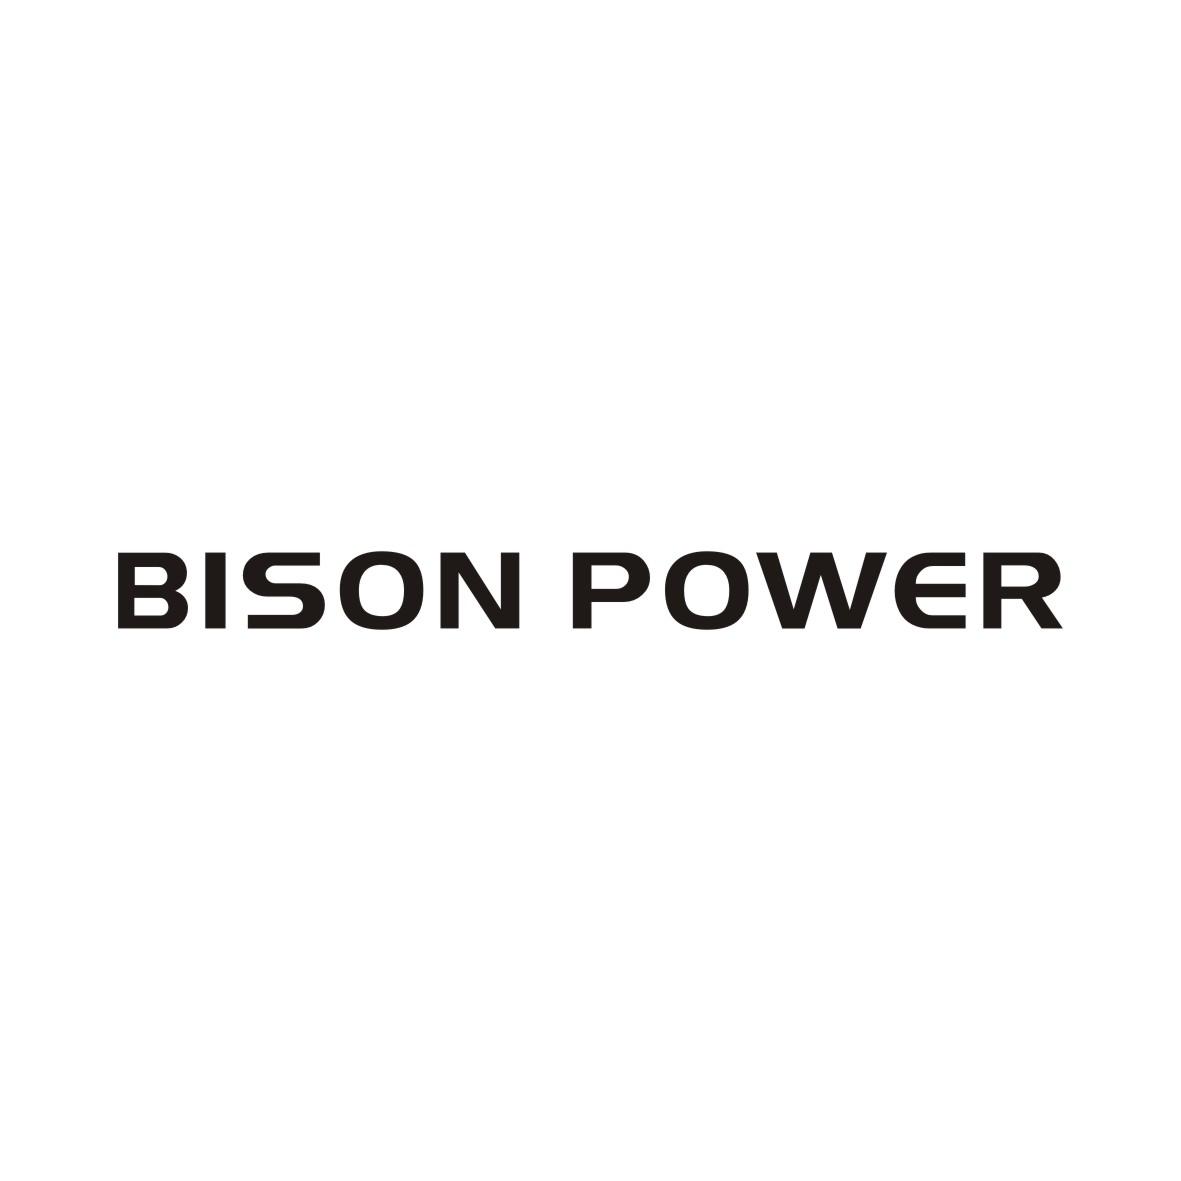 BISON POWER商标转让